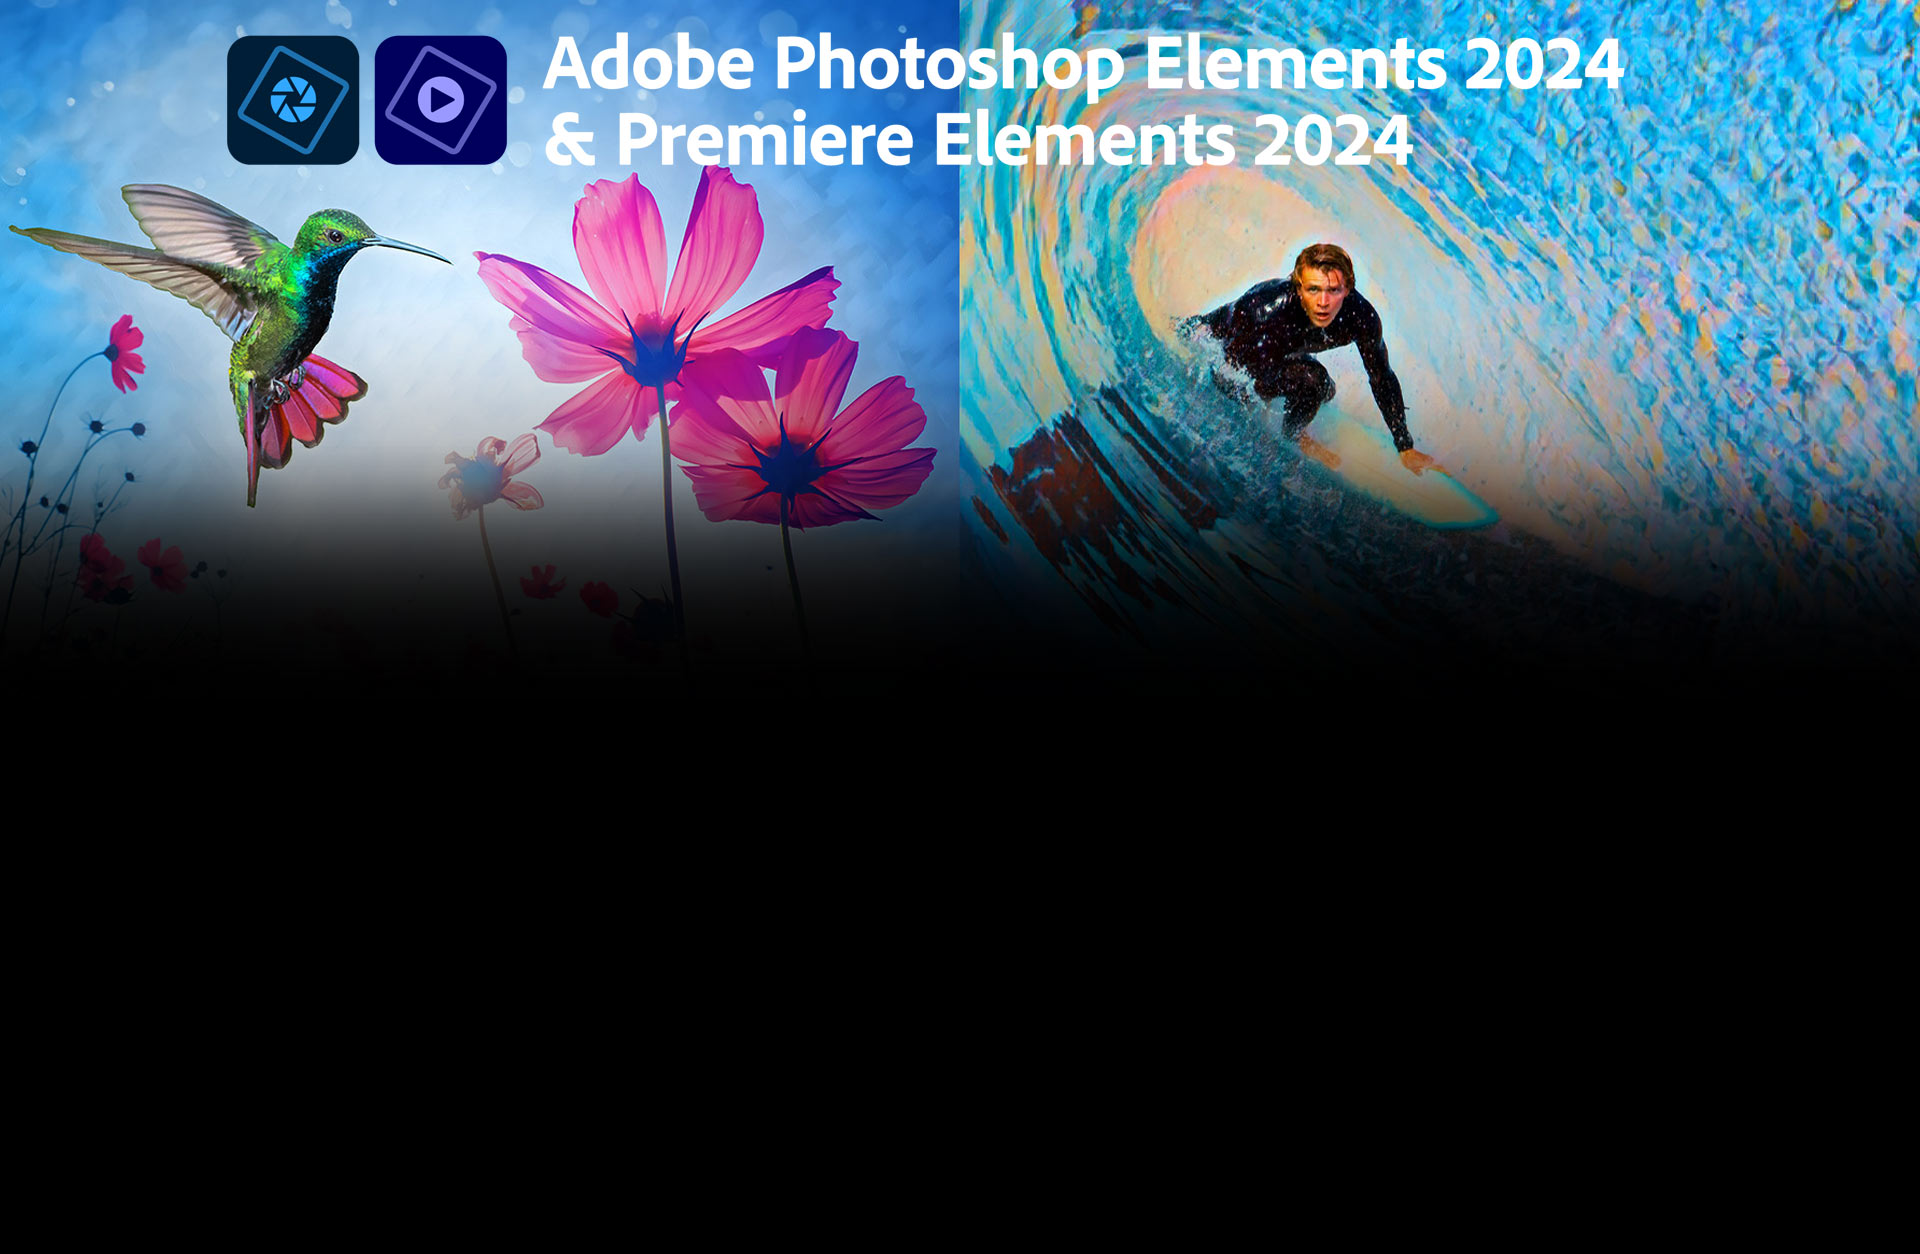 Adobe Photoshop Elements 2024 & Adobe Premiere Elements 2024 (Windows) 